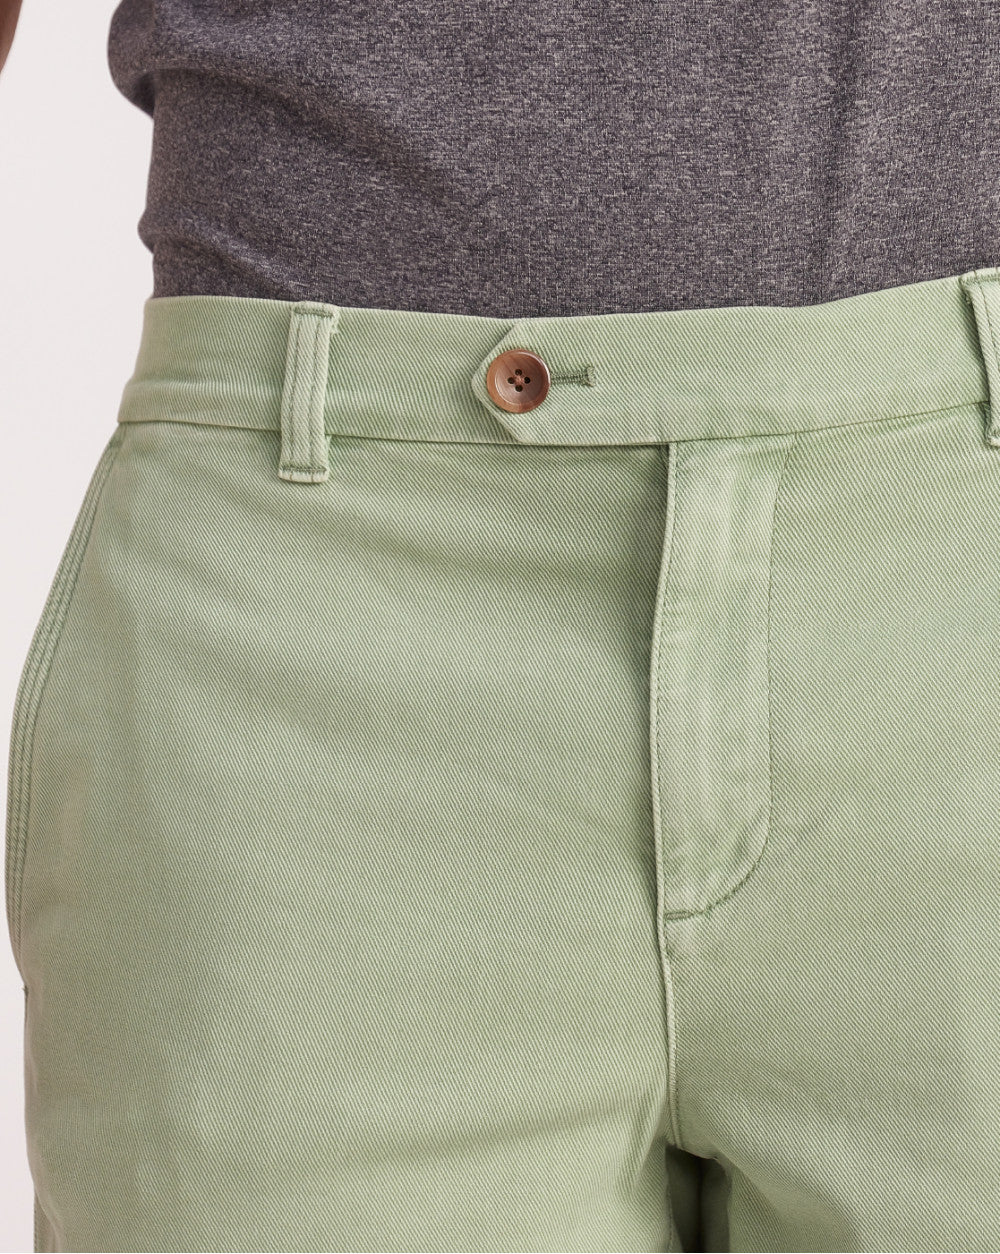 Garment Dyed Elasticized Shorts - Green Apple